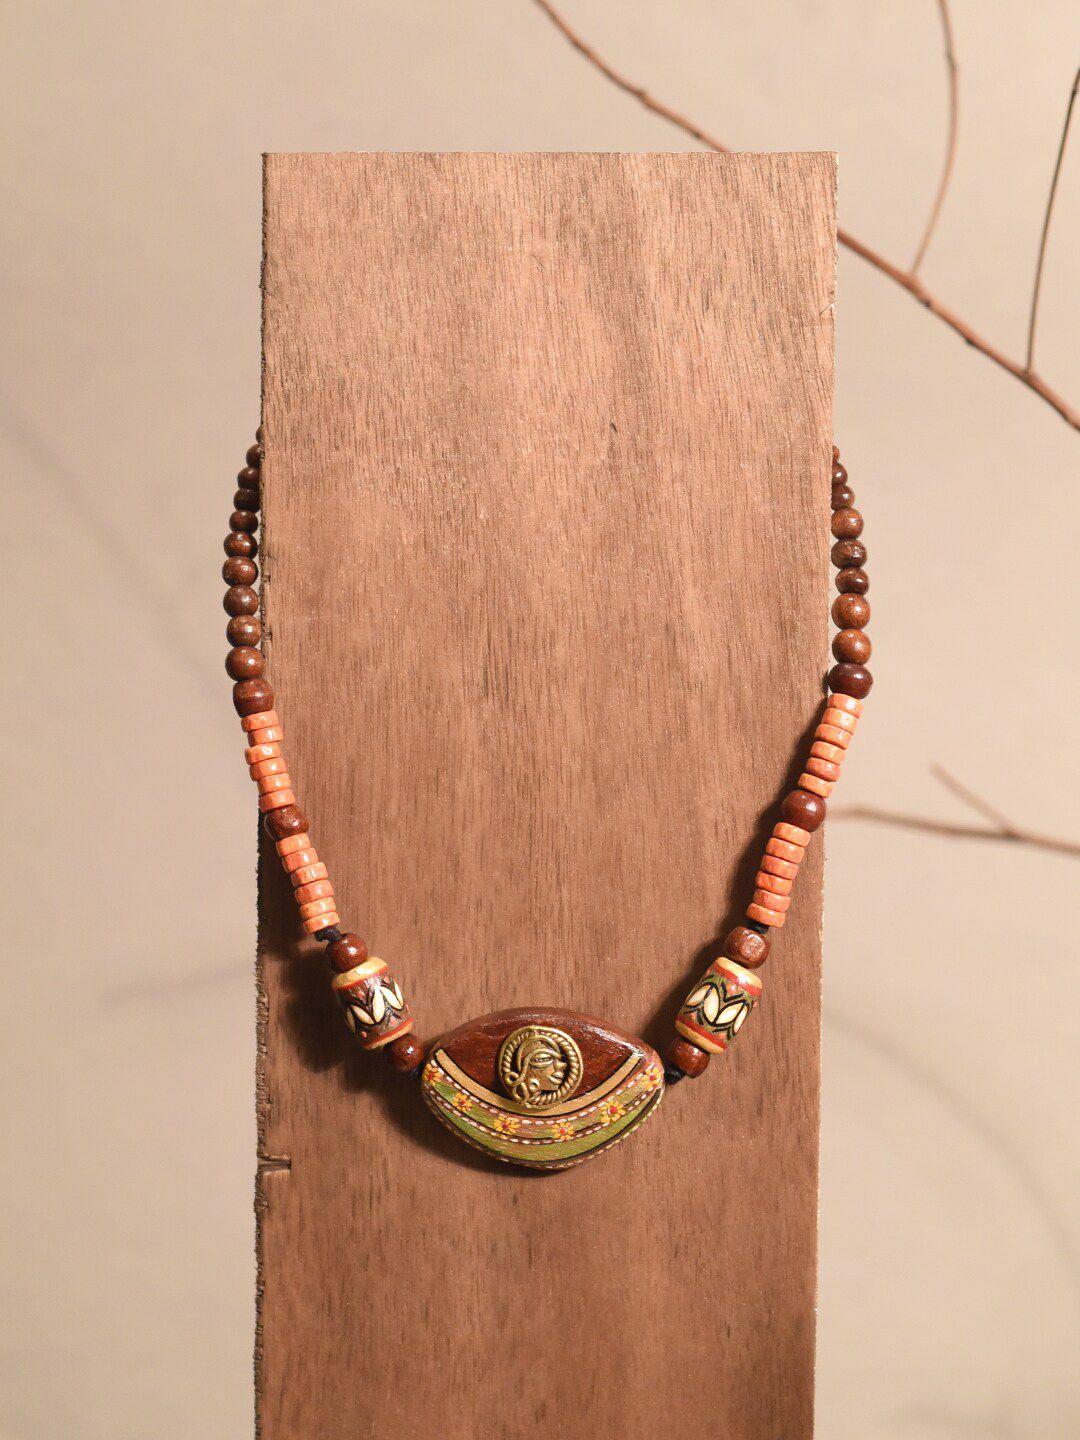 aakriti art creations unisex brass-plated necklace